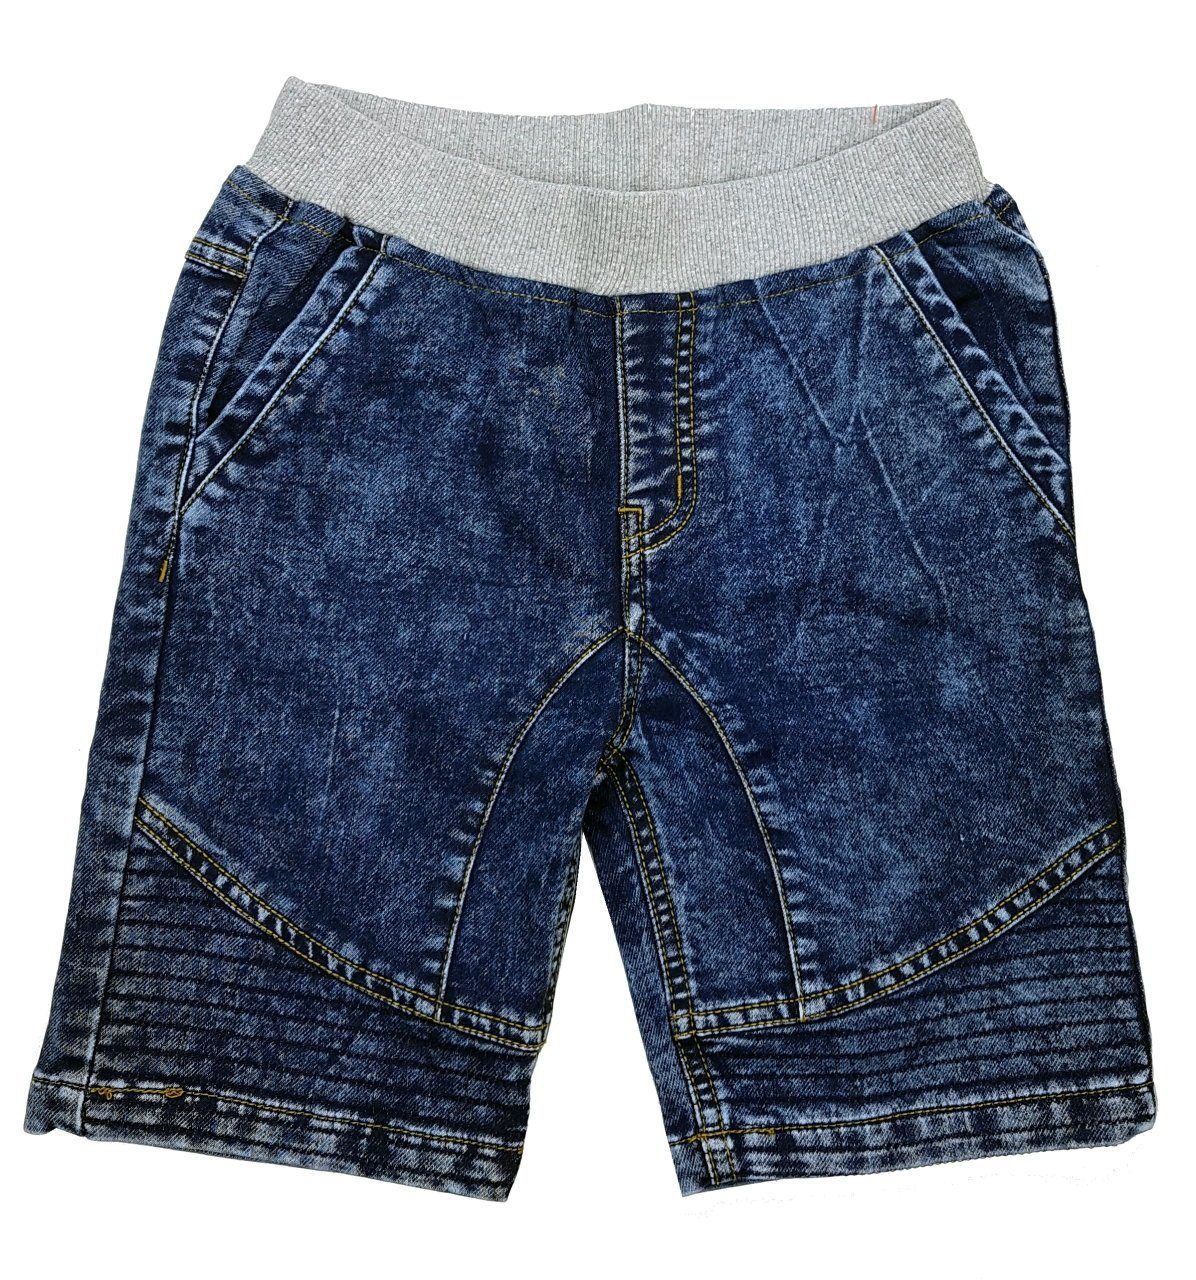 Jogg-Jeansbermudas Hose, Bermuda Stretch Jeans Fashion Sommerhose, Boy Jn206